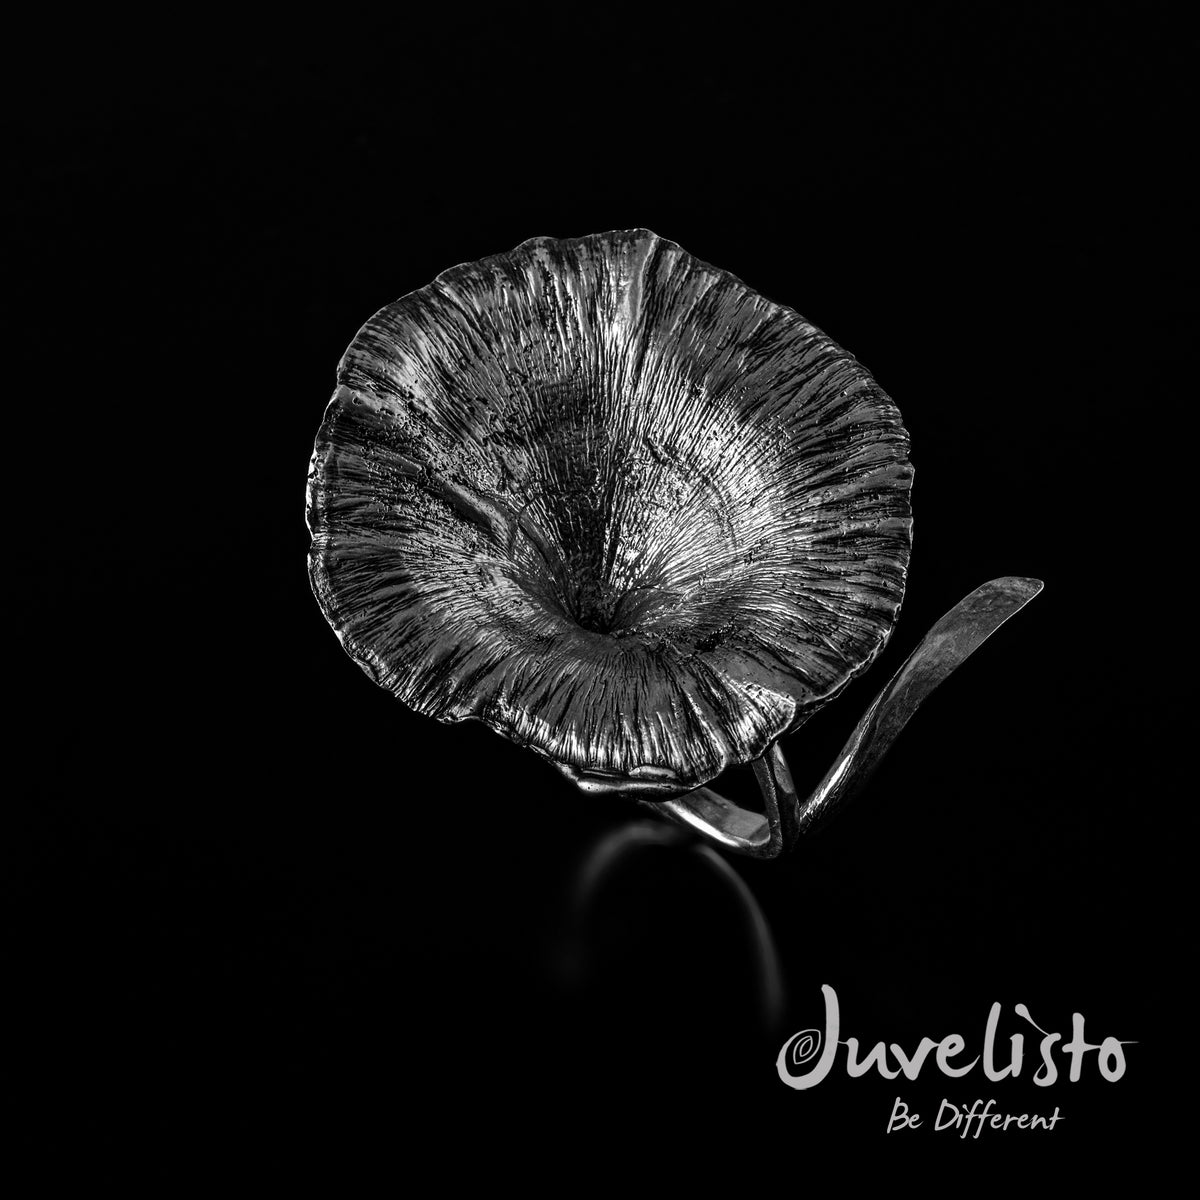 Juvelisto Design | Sterling Silver Oyster Mushroom Ring